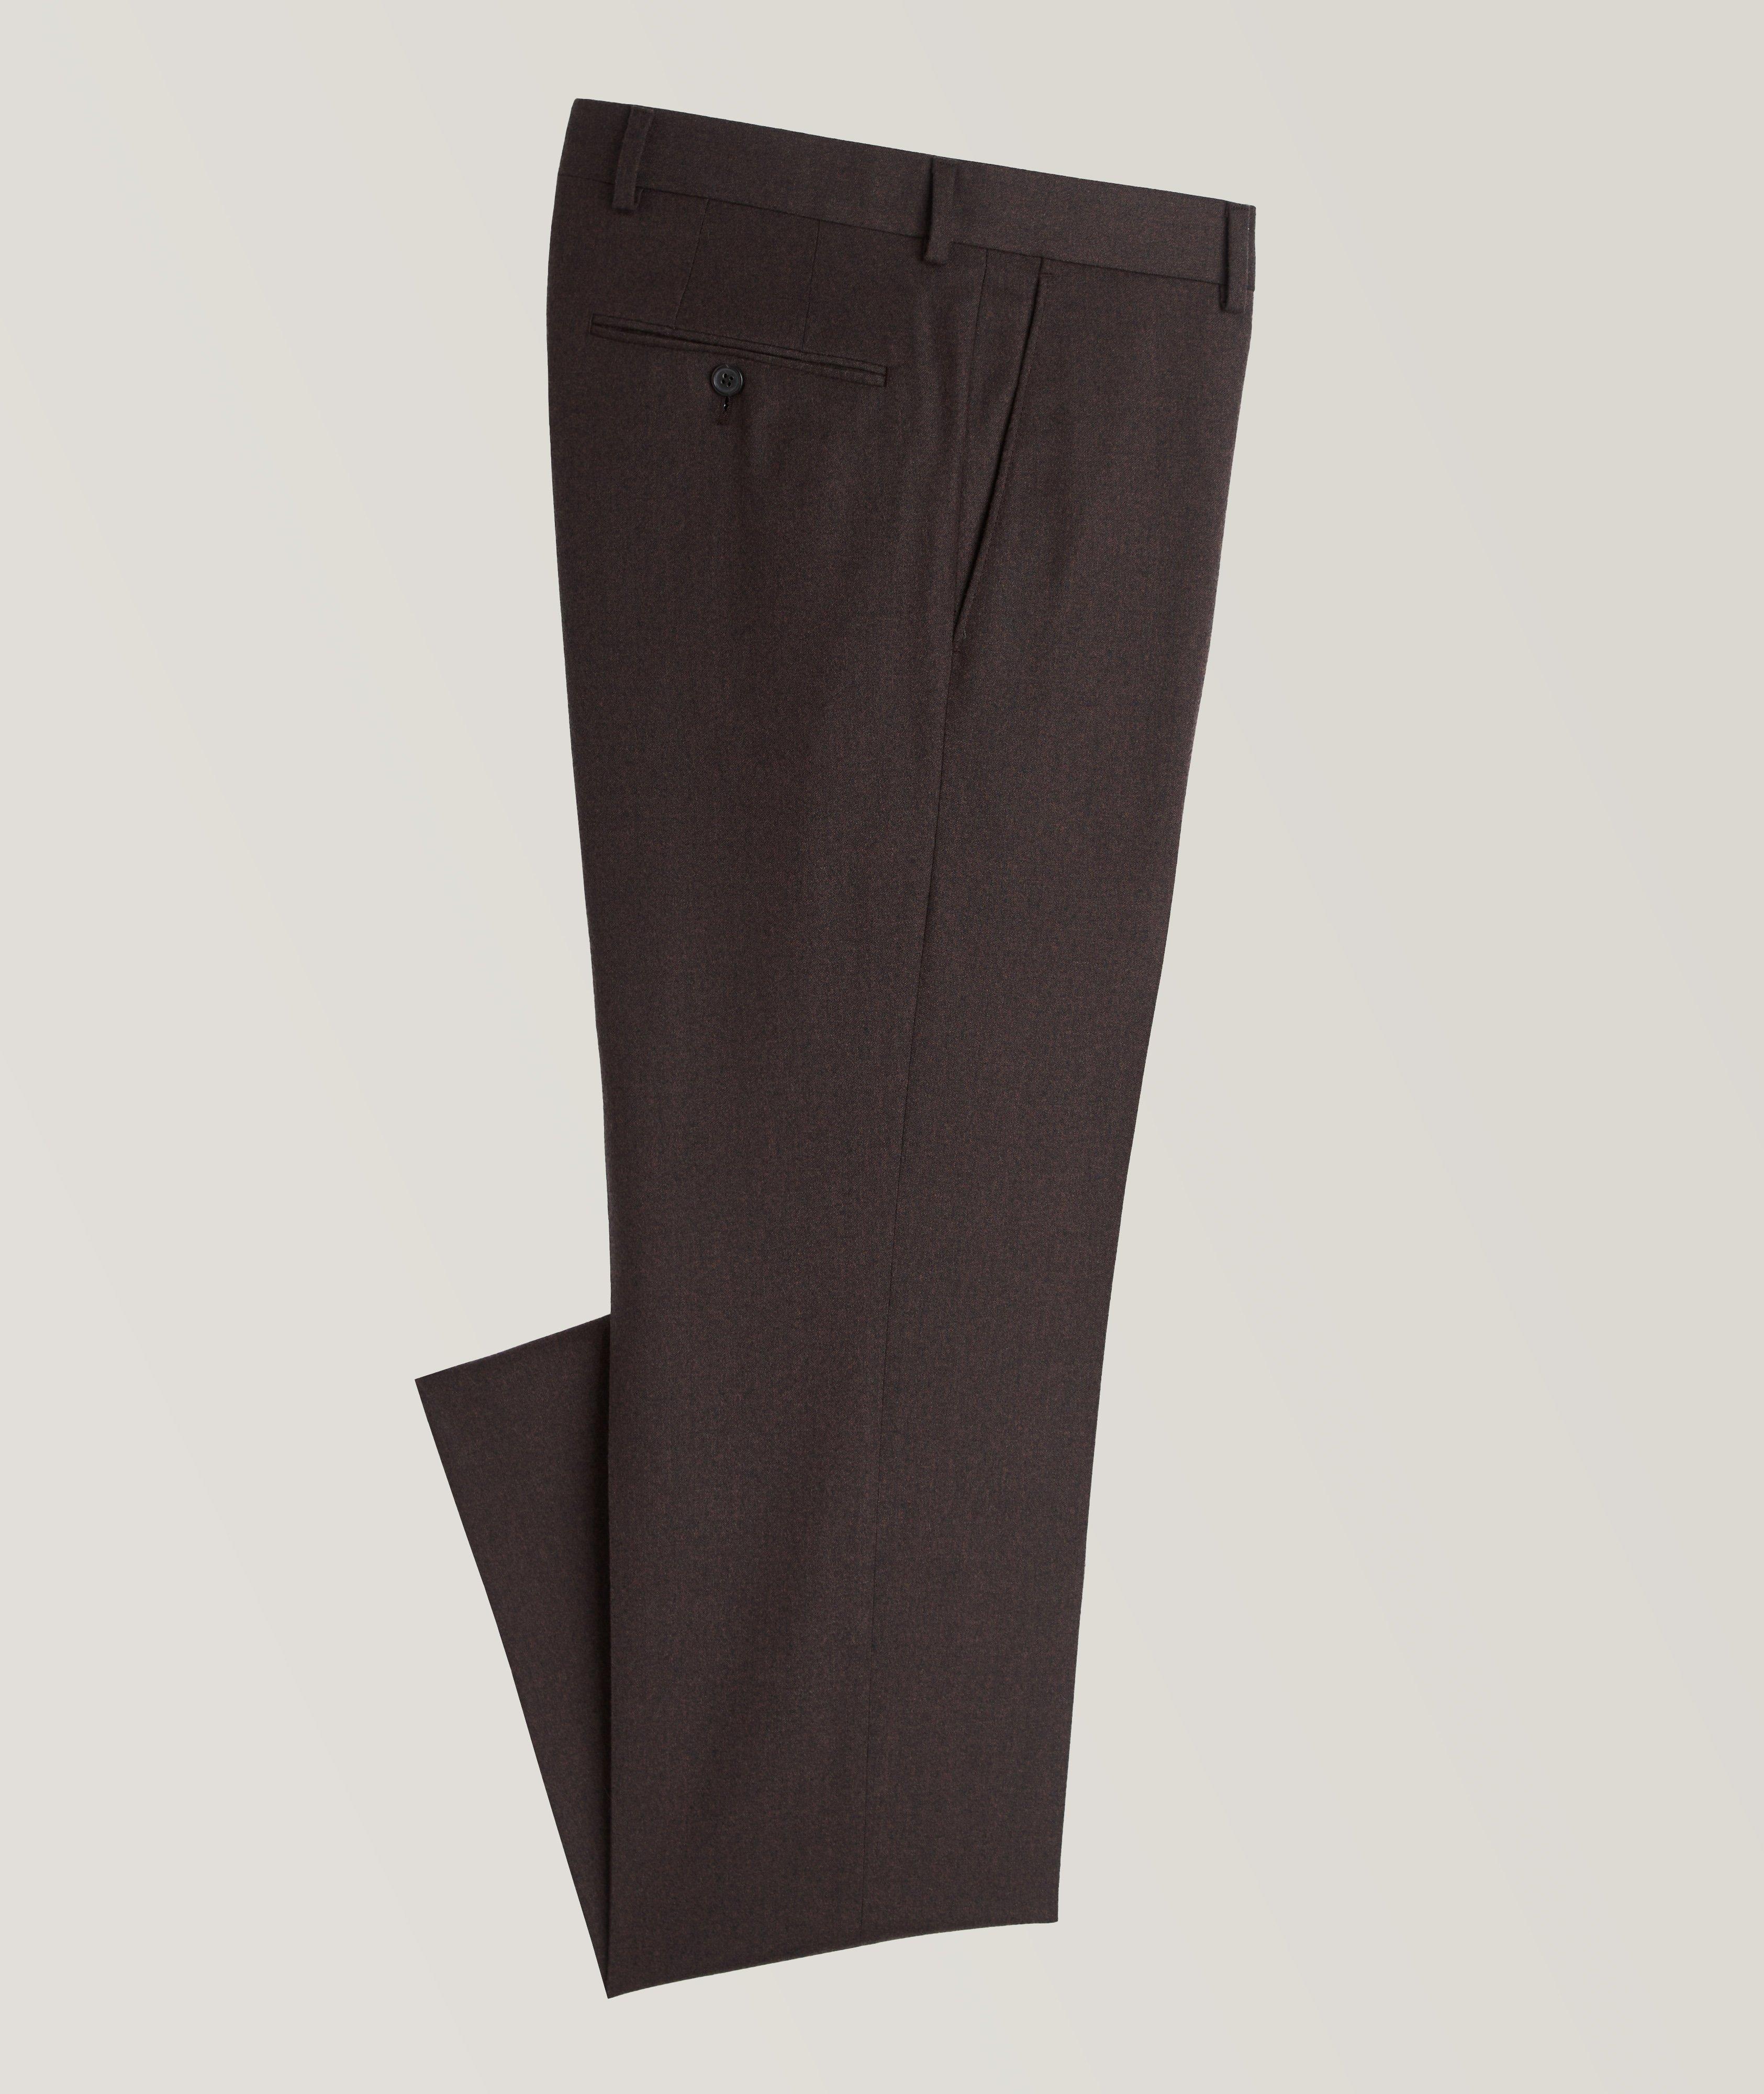 Samuelsohn Slim Fit Flannel Wool Dress Pants | Dress Pants | Final Cut